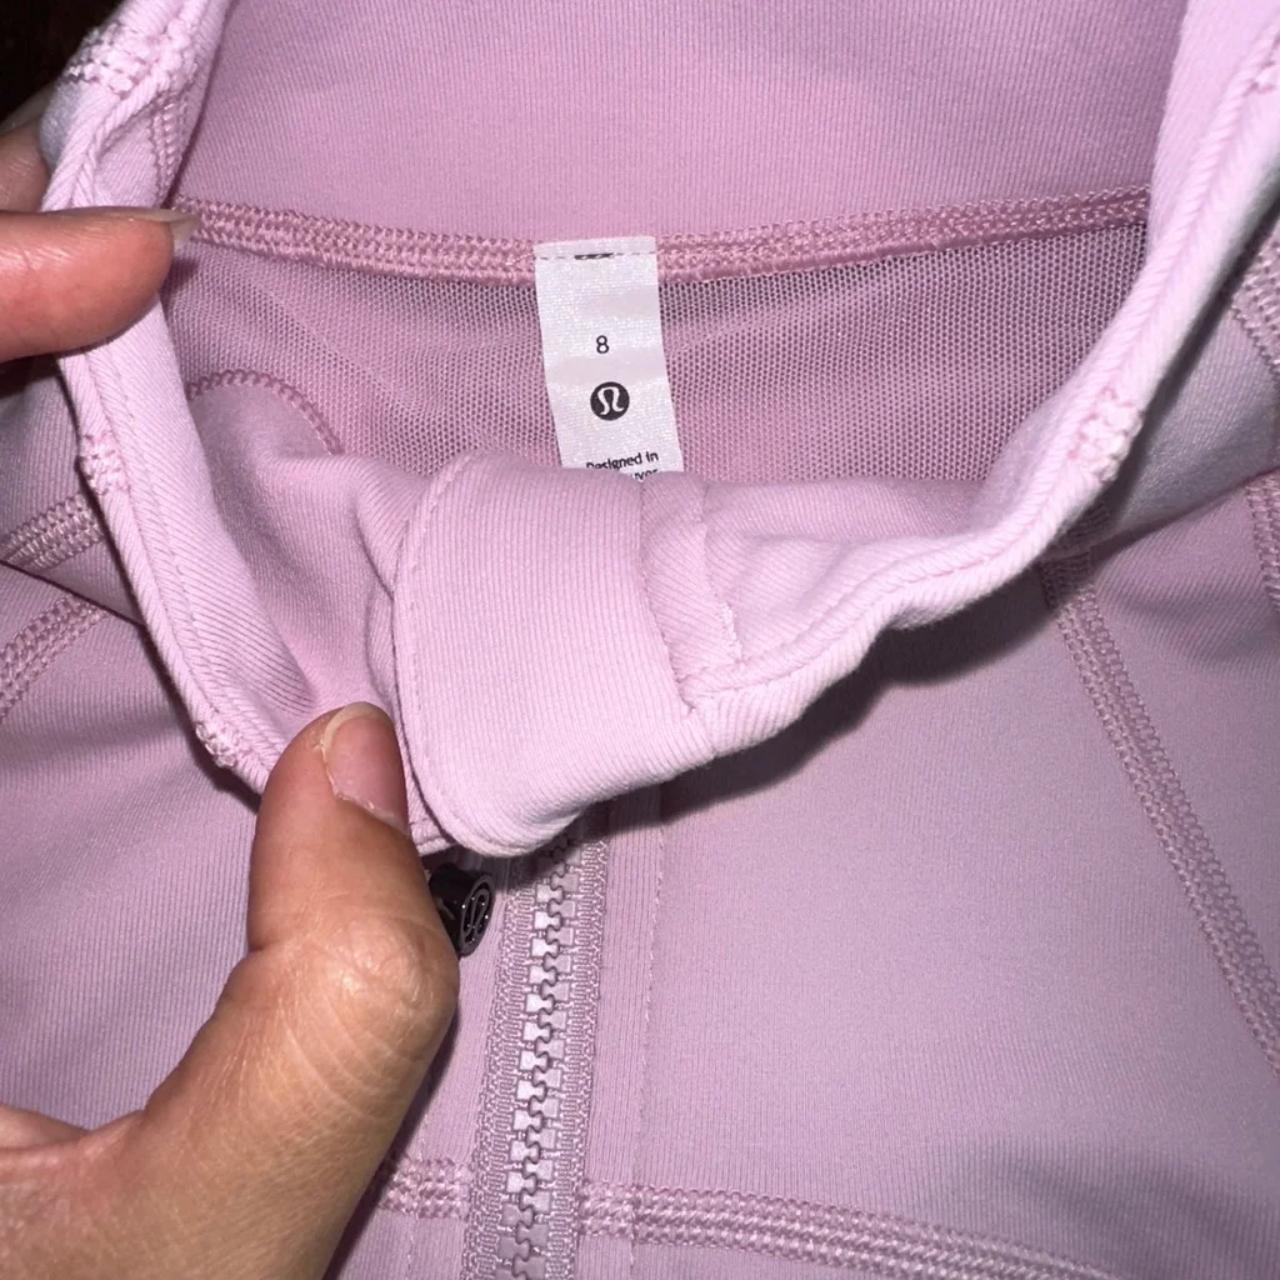 pink lulu align jacket (bbl jacket) DOOP‼️ - Depop